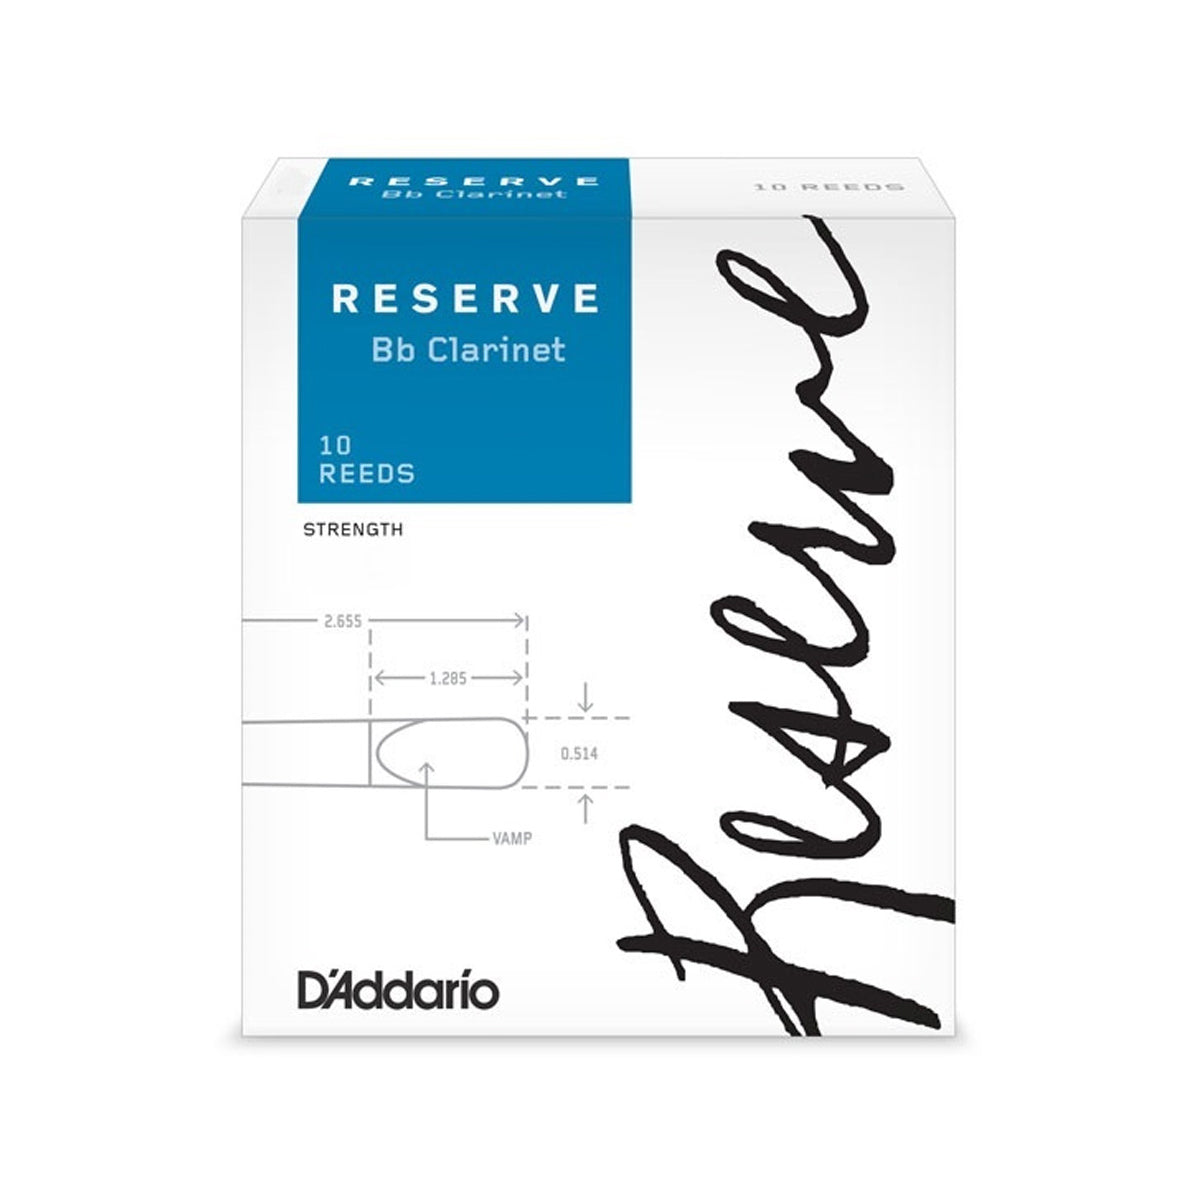 D'Addario DCR1020 Reserve Clarinet Bb 2 Reed - Per Box